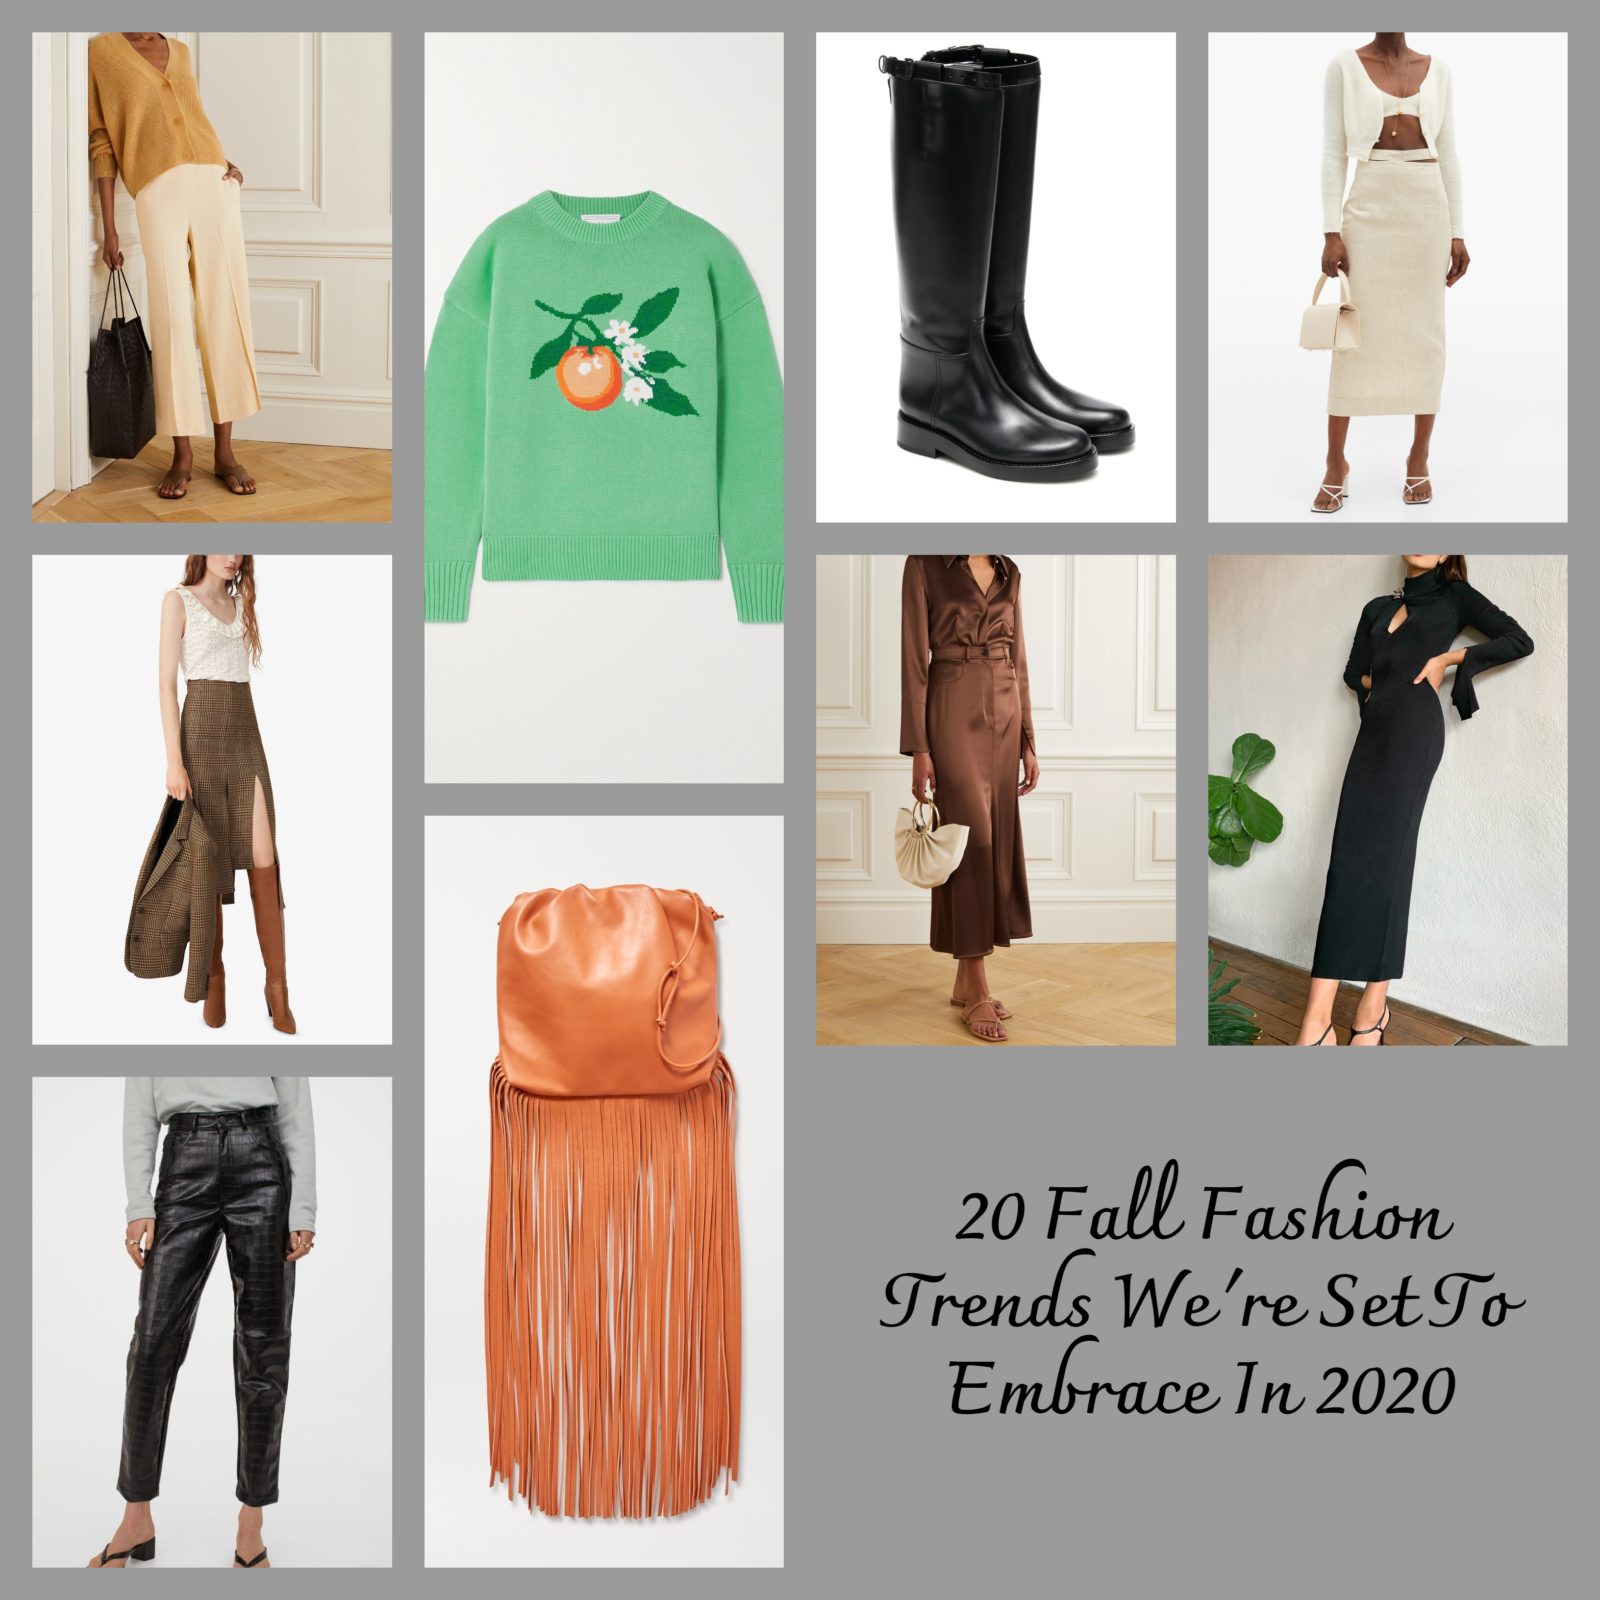 Fall fashion trends